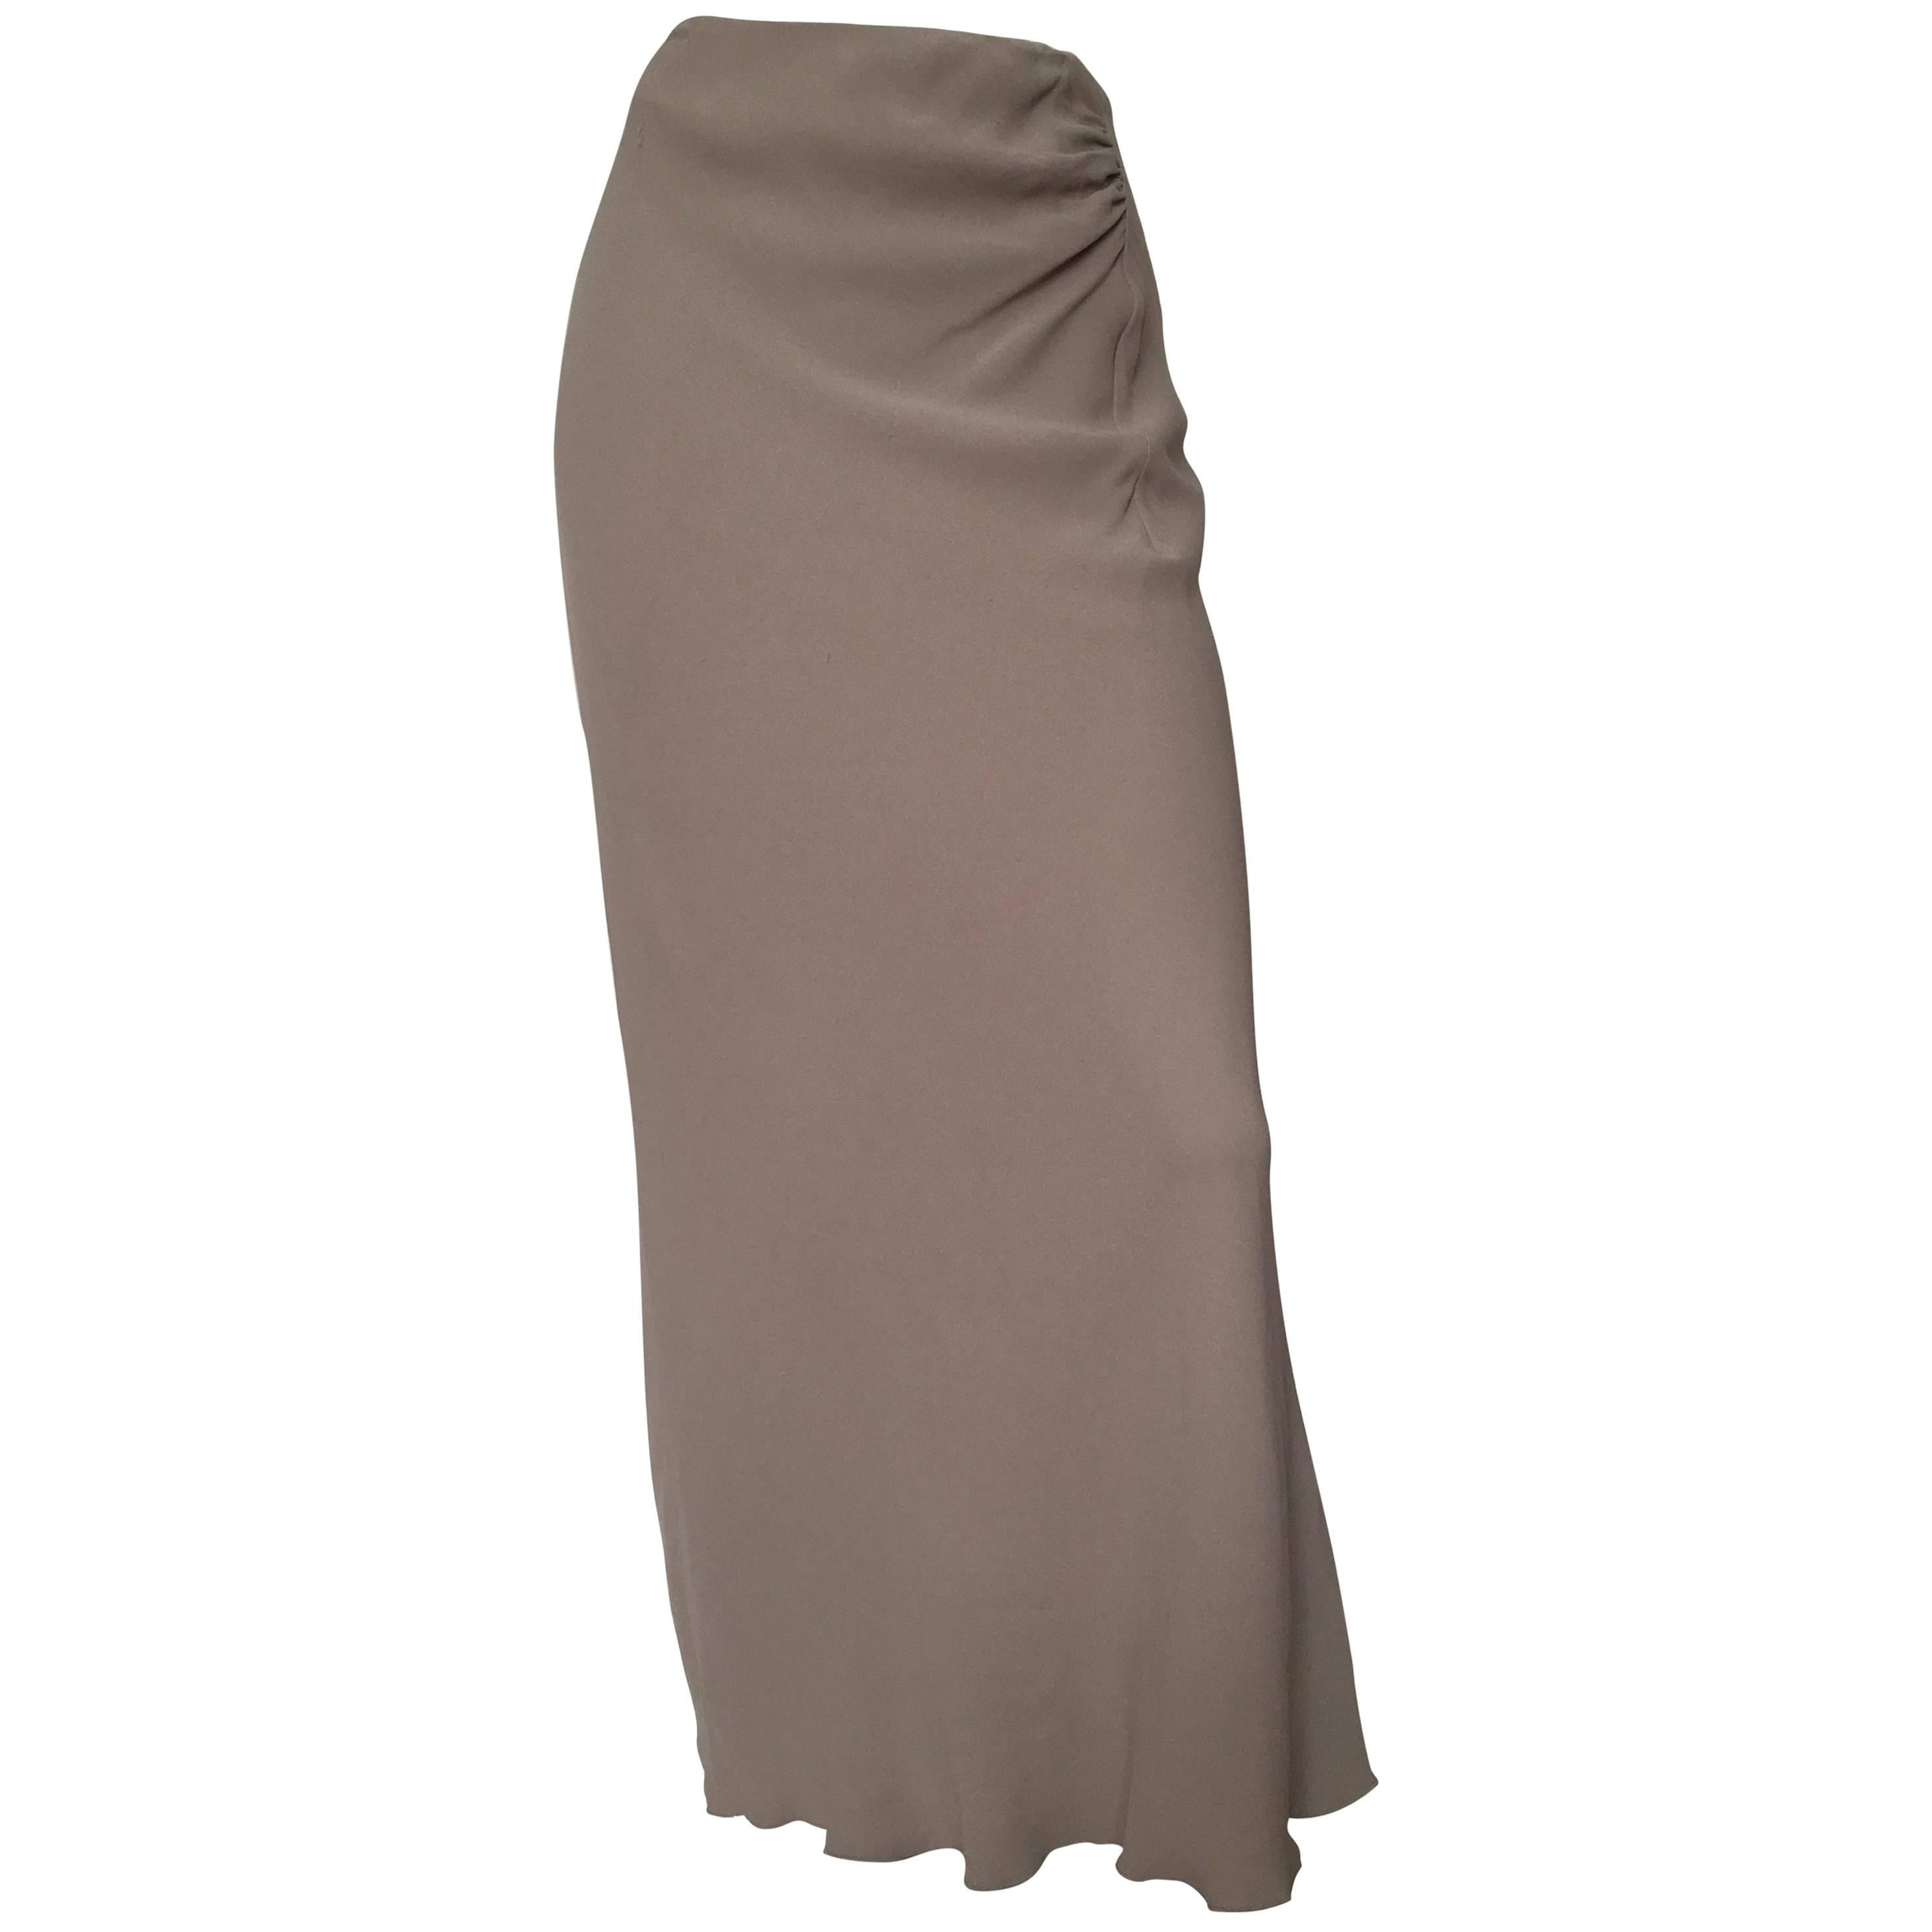 Guy Laroche Grey Silk Long Skirt Size 12. Never Worn. For Sale